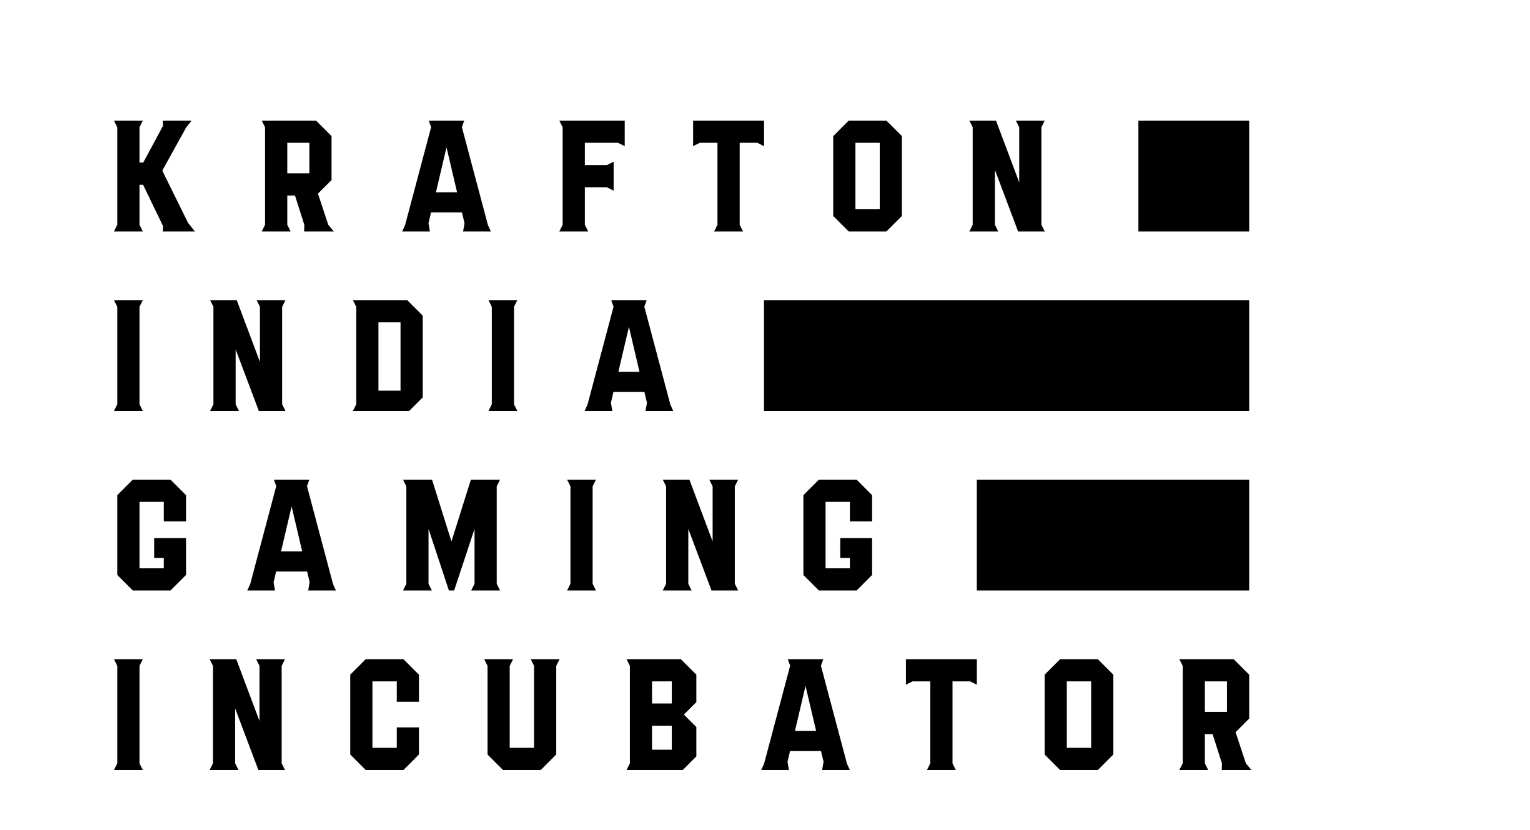 Bgmi Maker Krafton Launches Krafton India Gaming Incubator